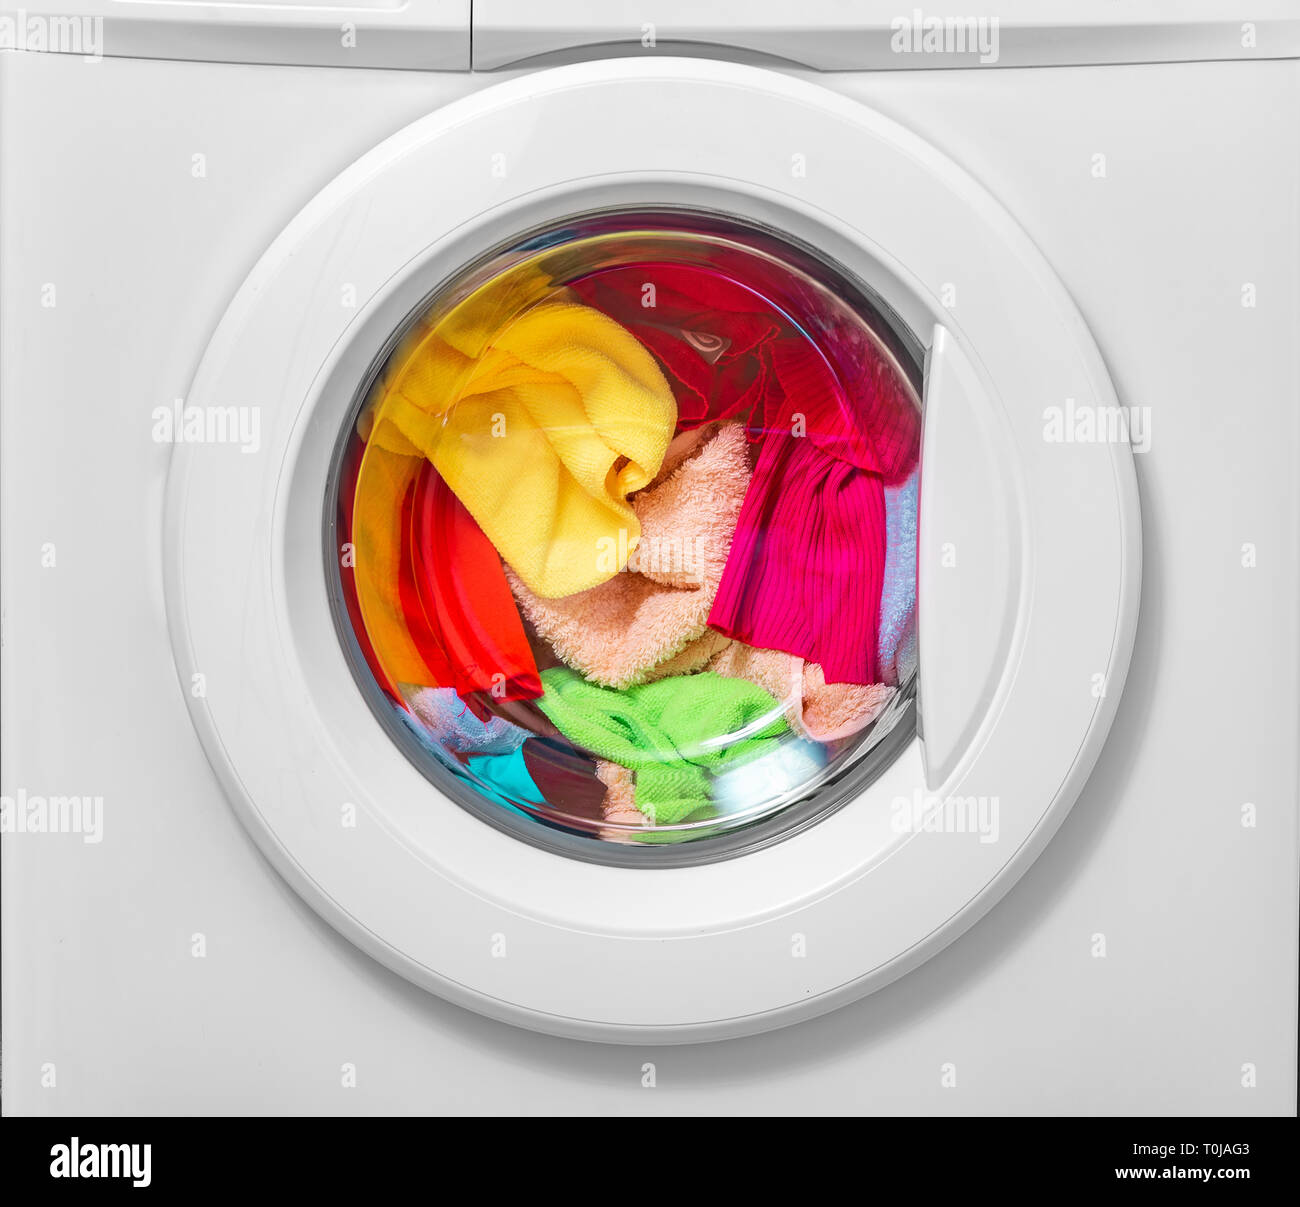 Washing machine with laundry loaded for washing. Stock Photo